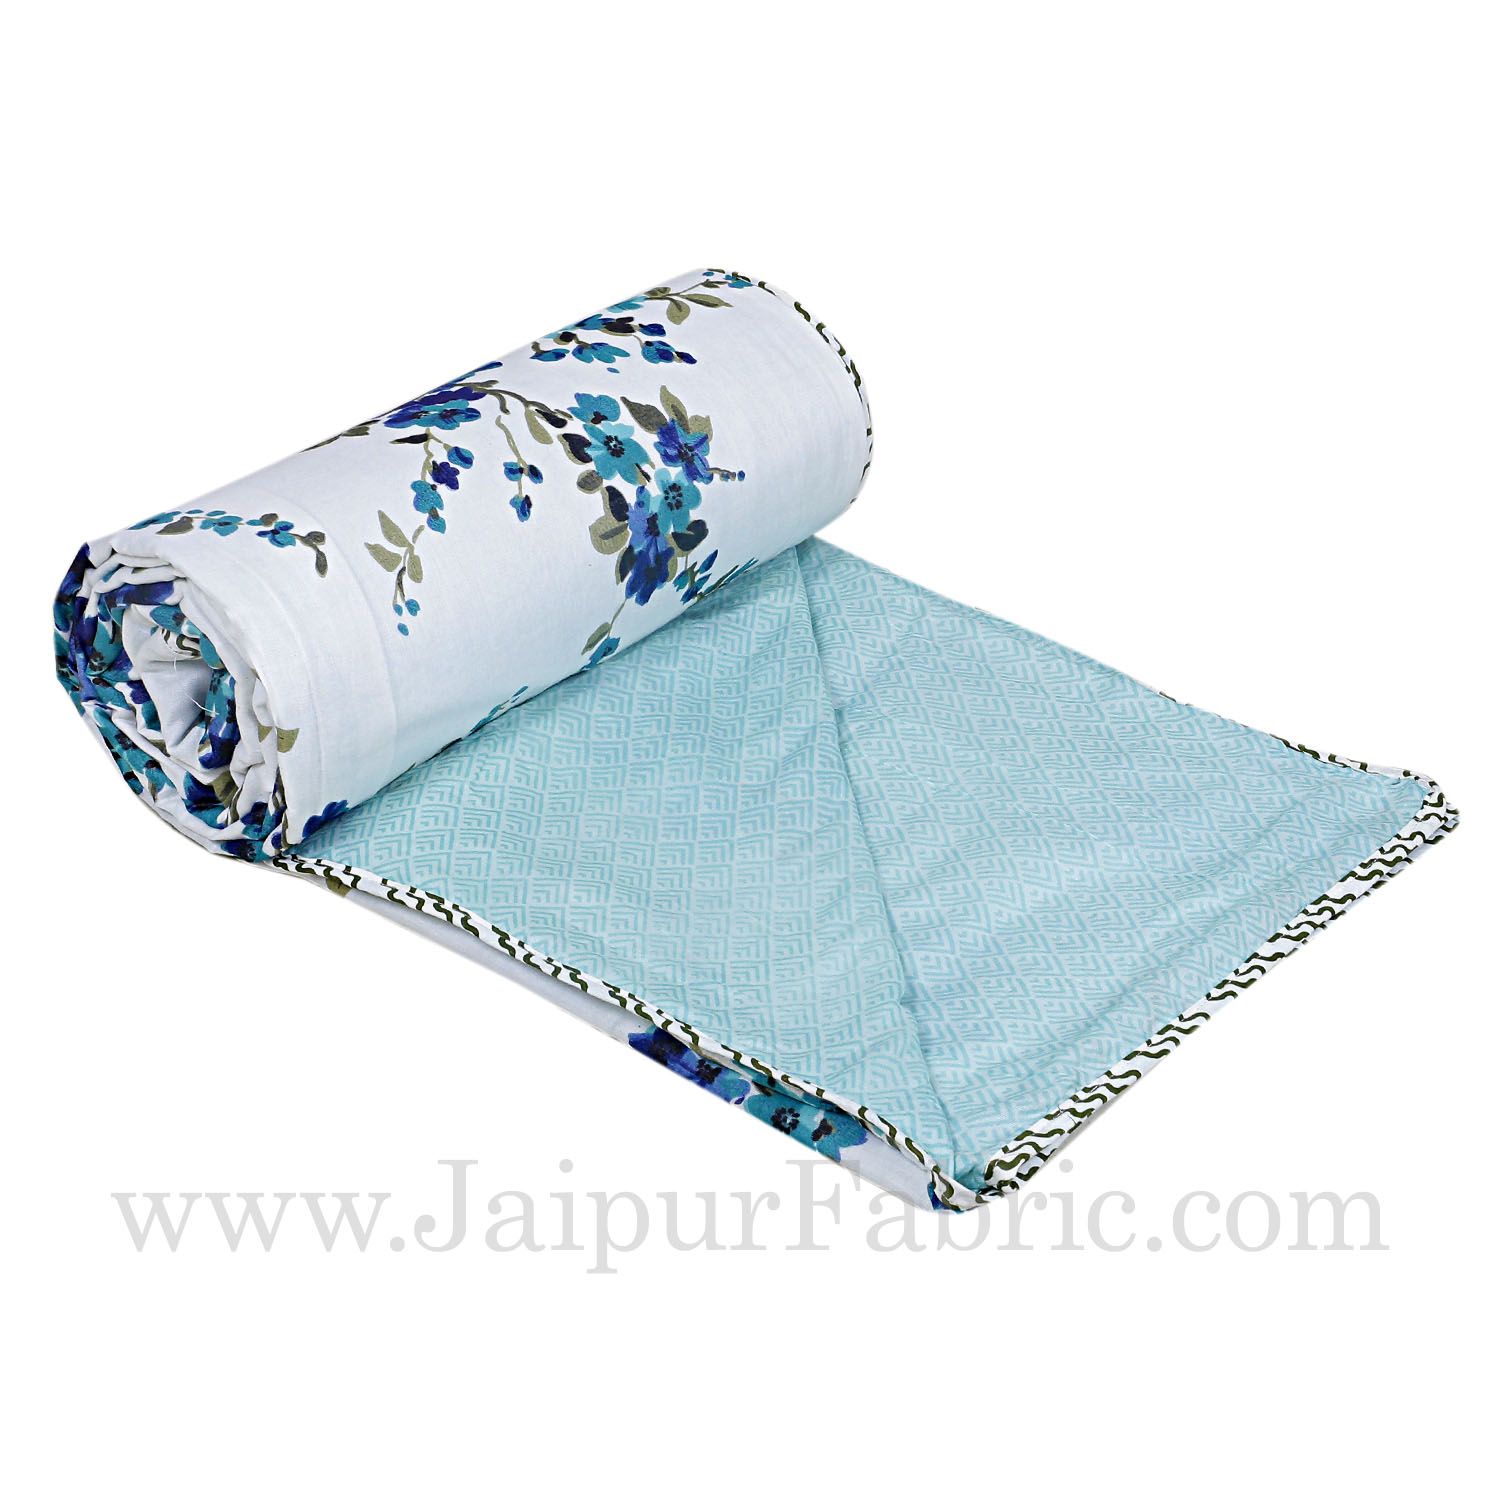 Muslin Cotton Double bed Reversible mulmul Dohar in blue motif floral print